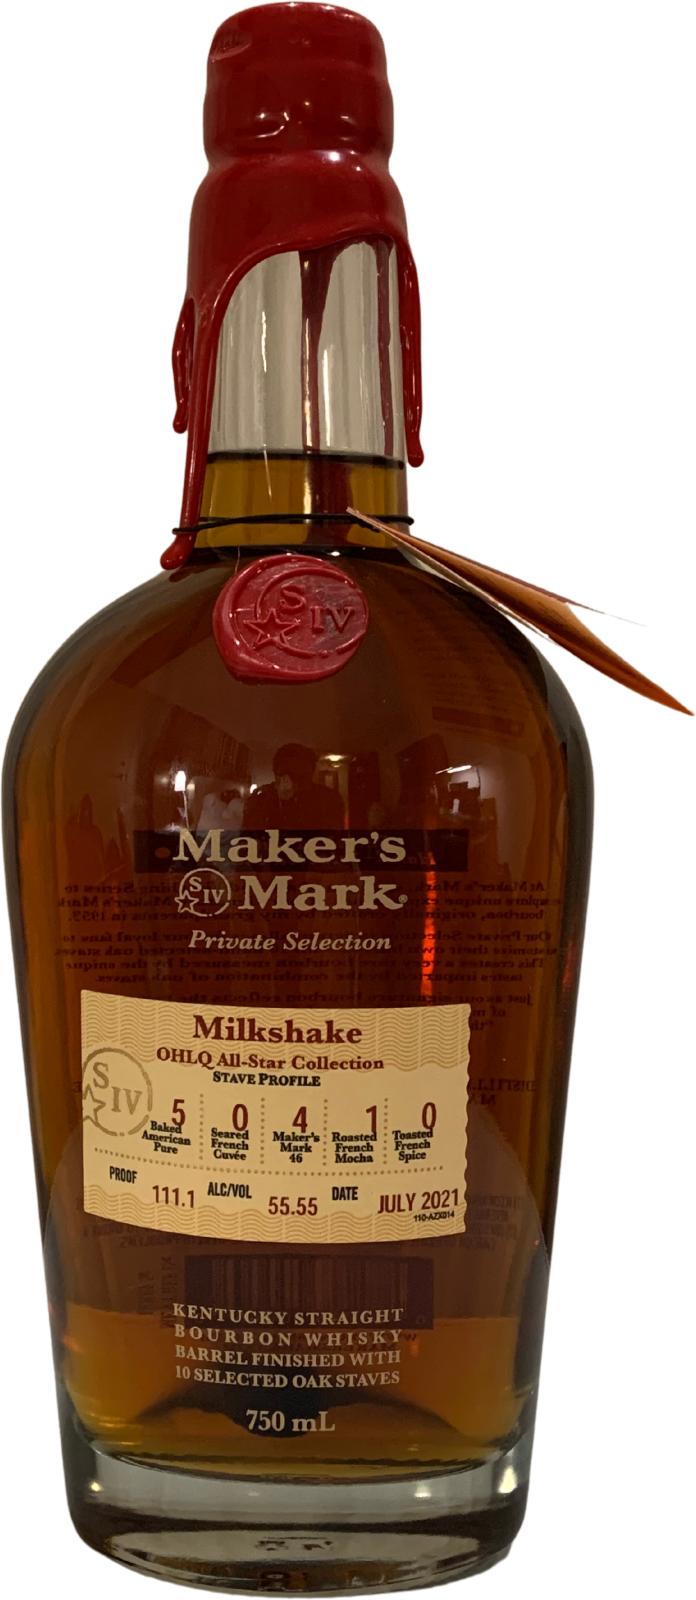 Maker's Mark Private Selection Milkshake OHLQ All-Star Collection 5BAP 0 SFC 4 MM46 1 RFM 0 TFS 55.55% 750ml